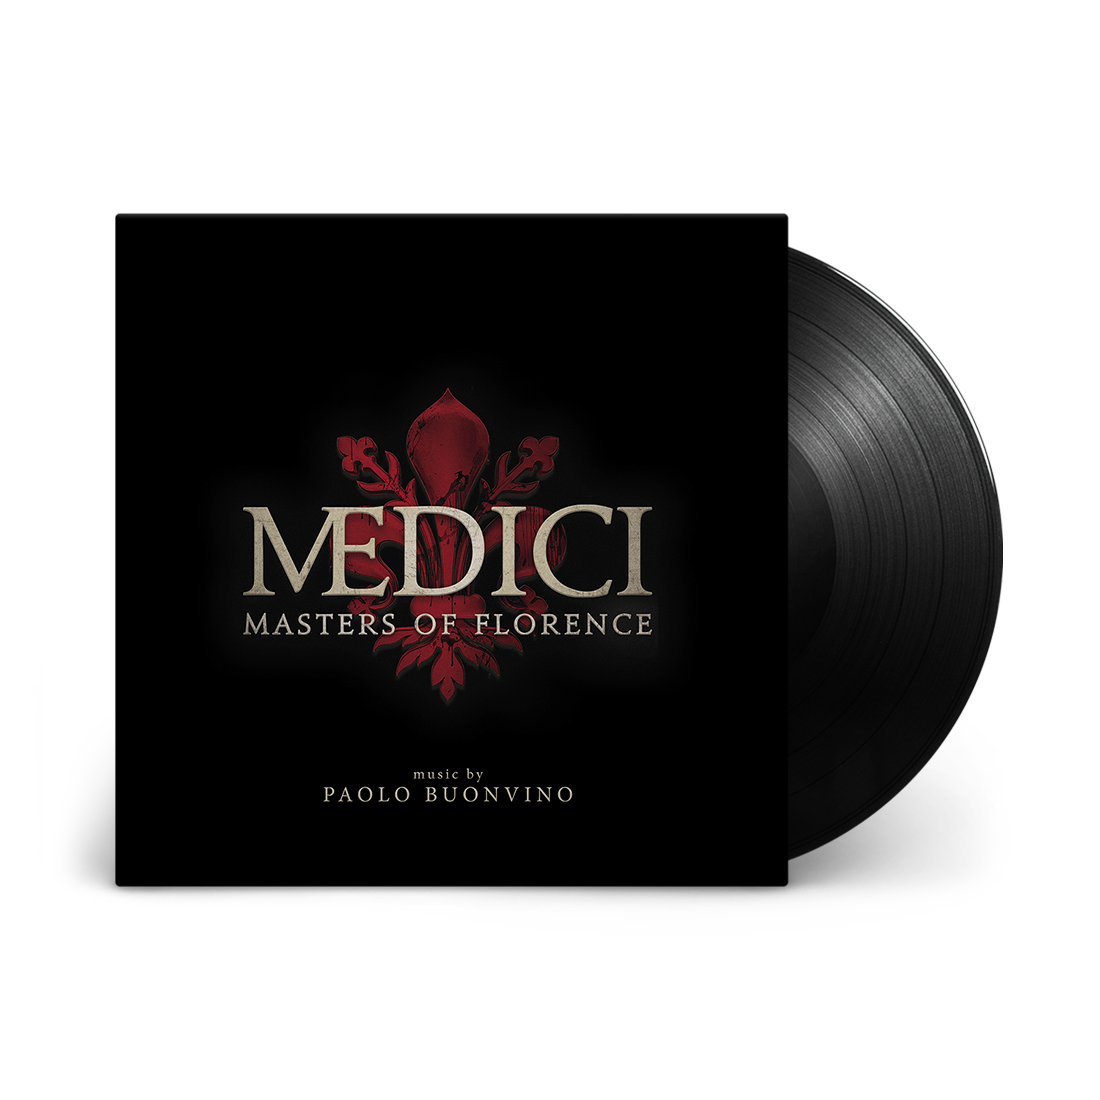 Paolo Buonvino - MEDICI - Masters of Florence: Vinyl LP